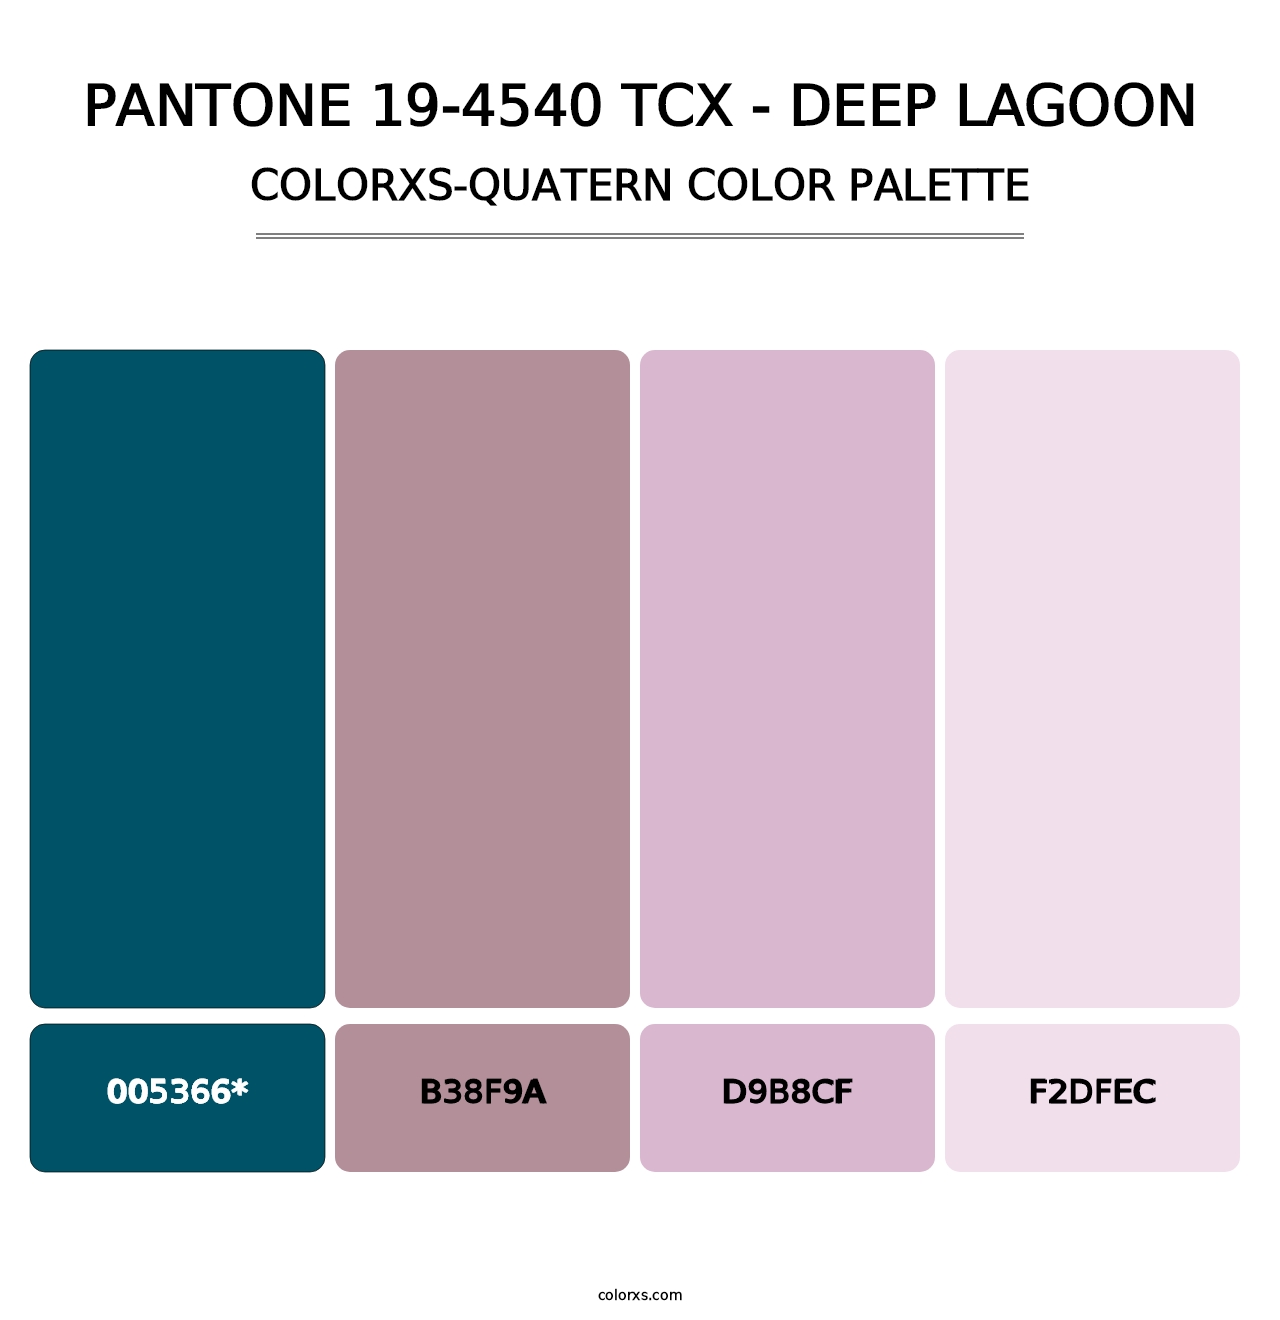 PANTONE 19-4540 TCX - Deep Lagoon - Colorxs Quatern Palette